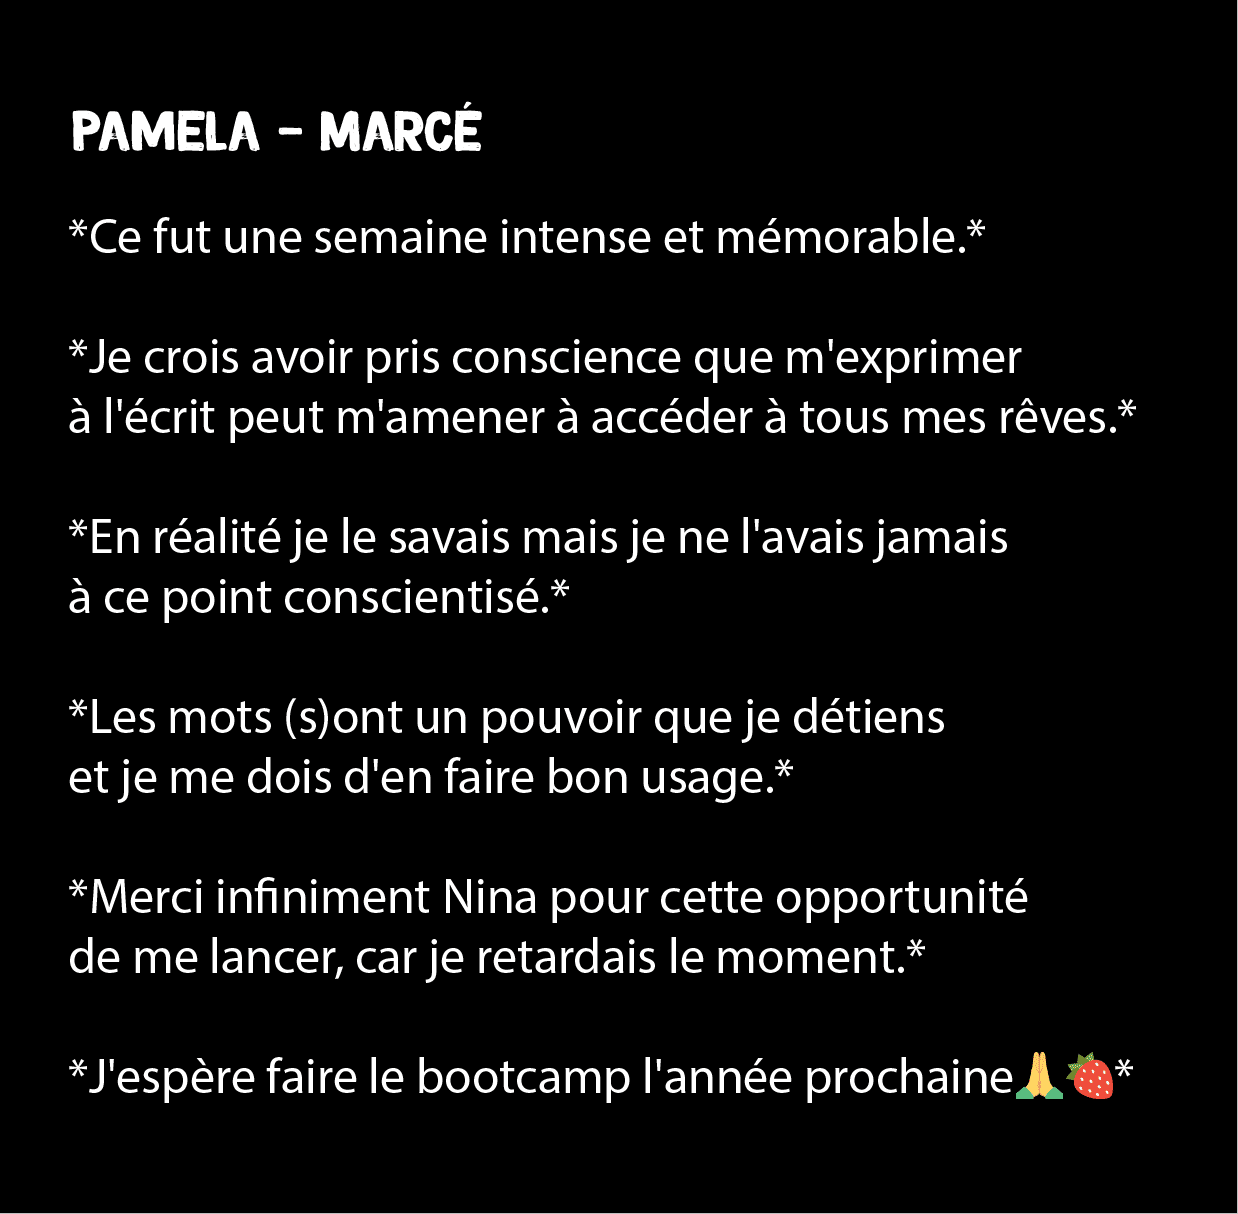 Pamela - Marcé